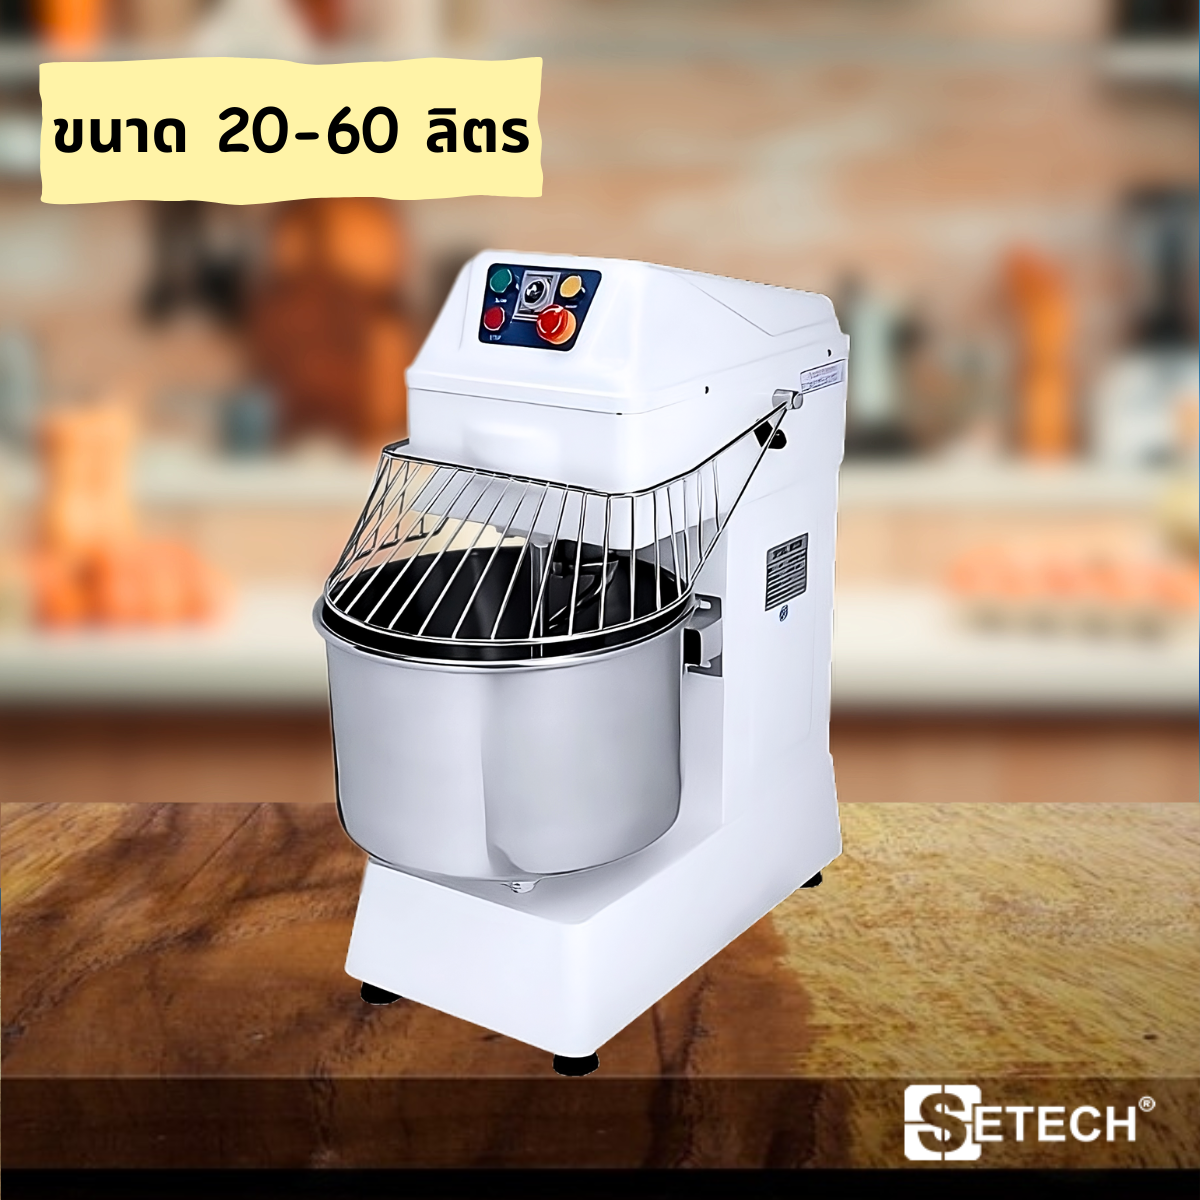 Dough kneading machine SETECH-MM20